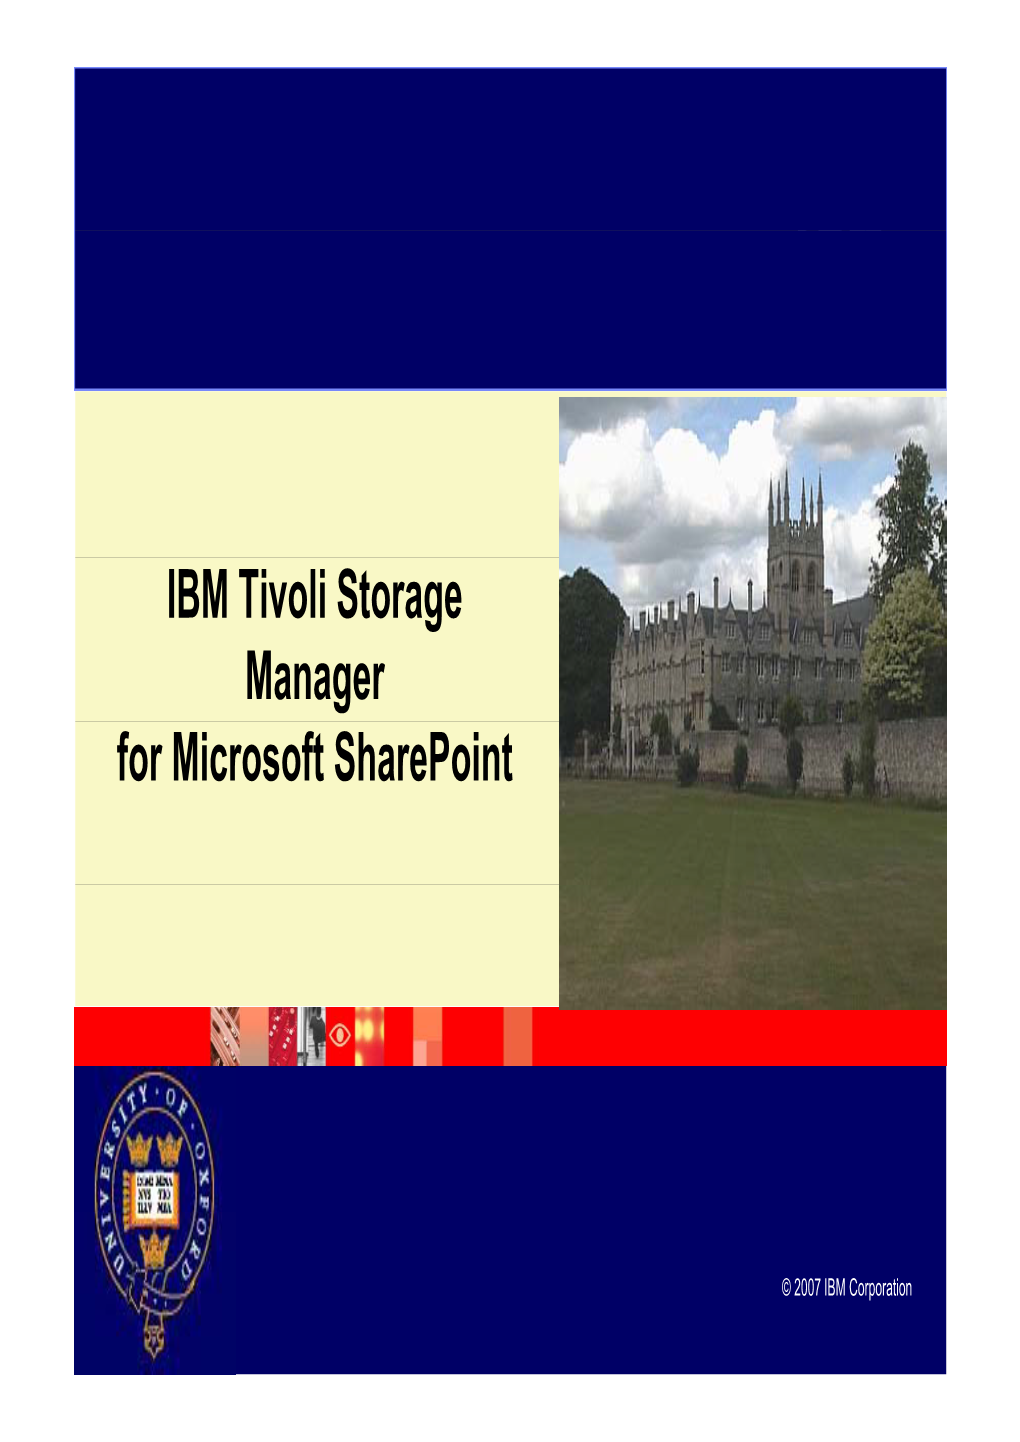 IBM Tivoli Storage Manager for Microsoft Sharepoint